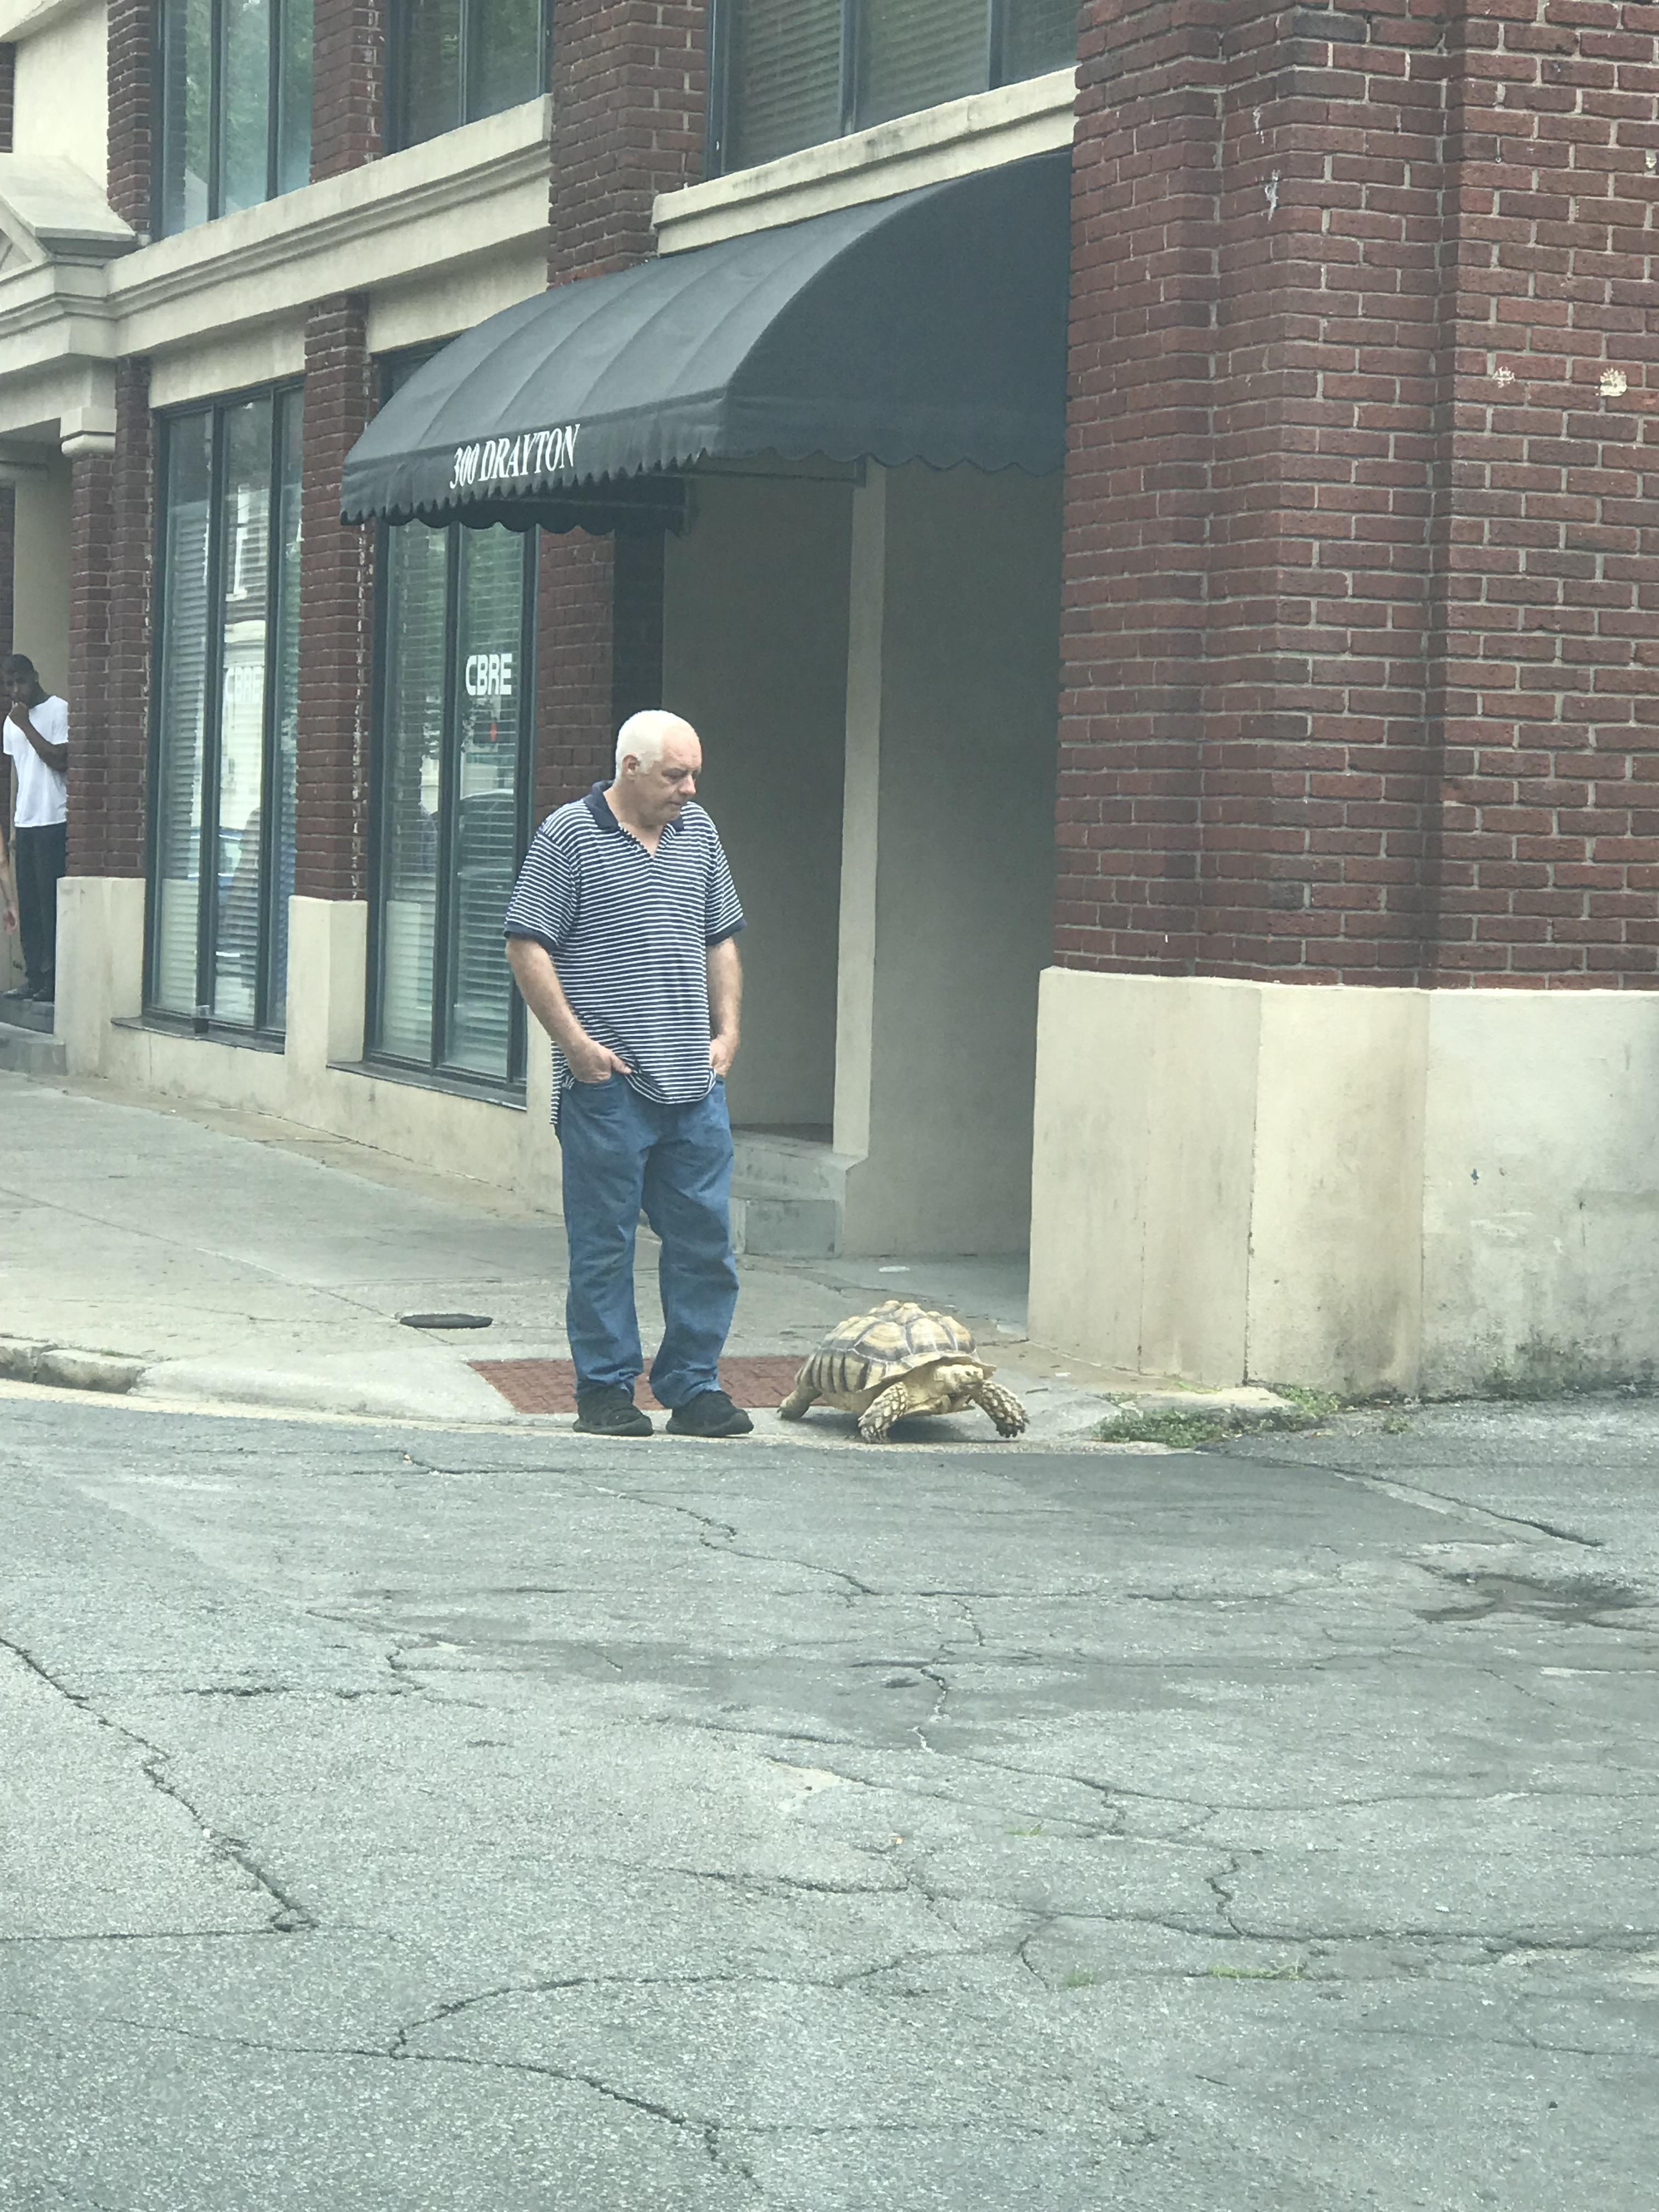 Just a man walking his tortoise.